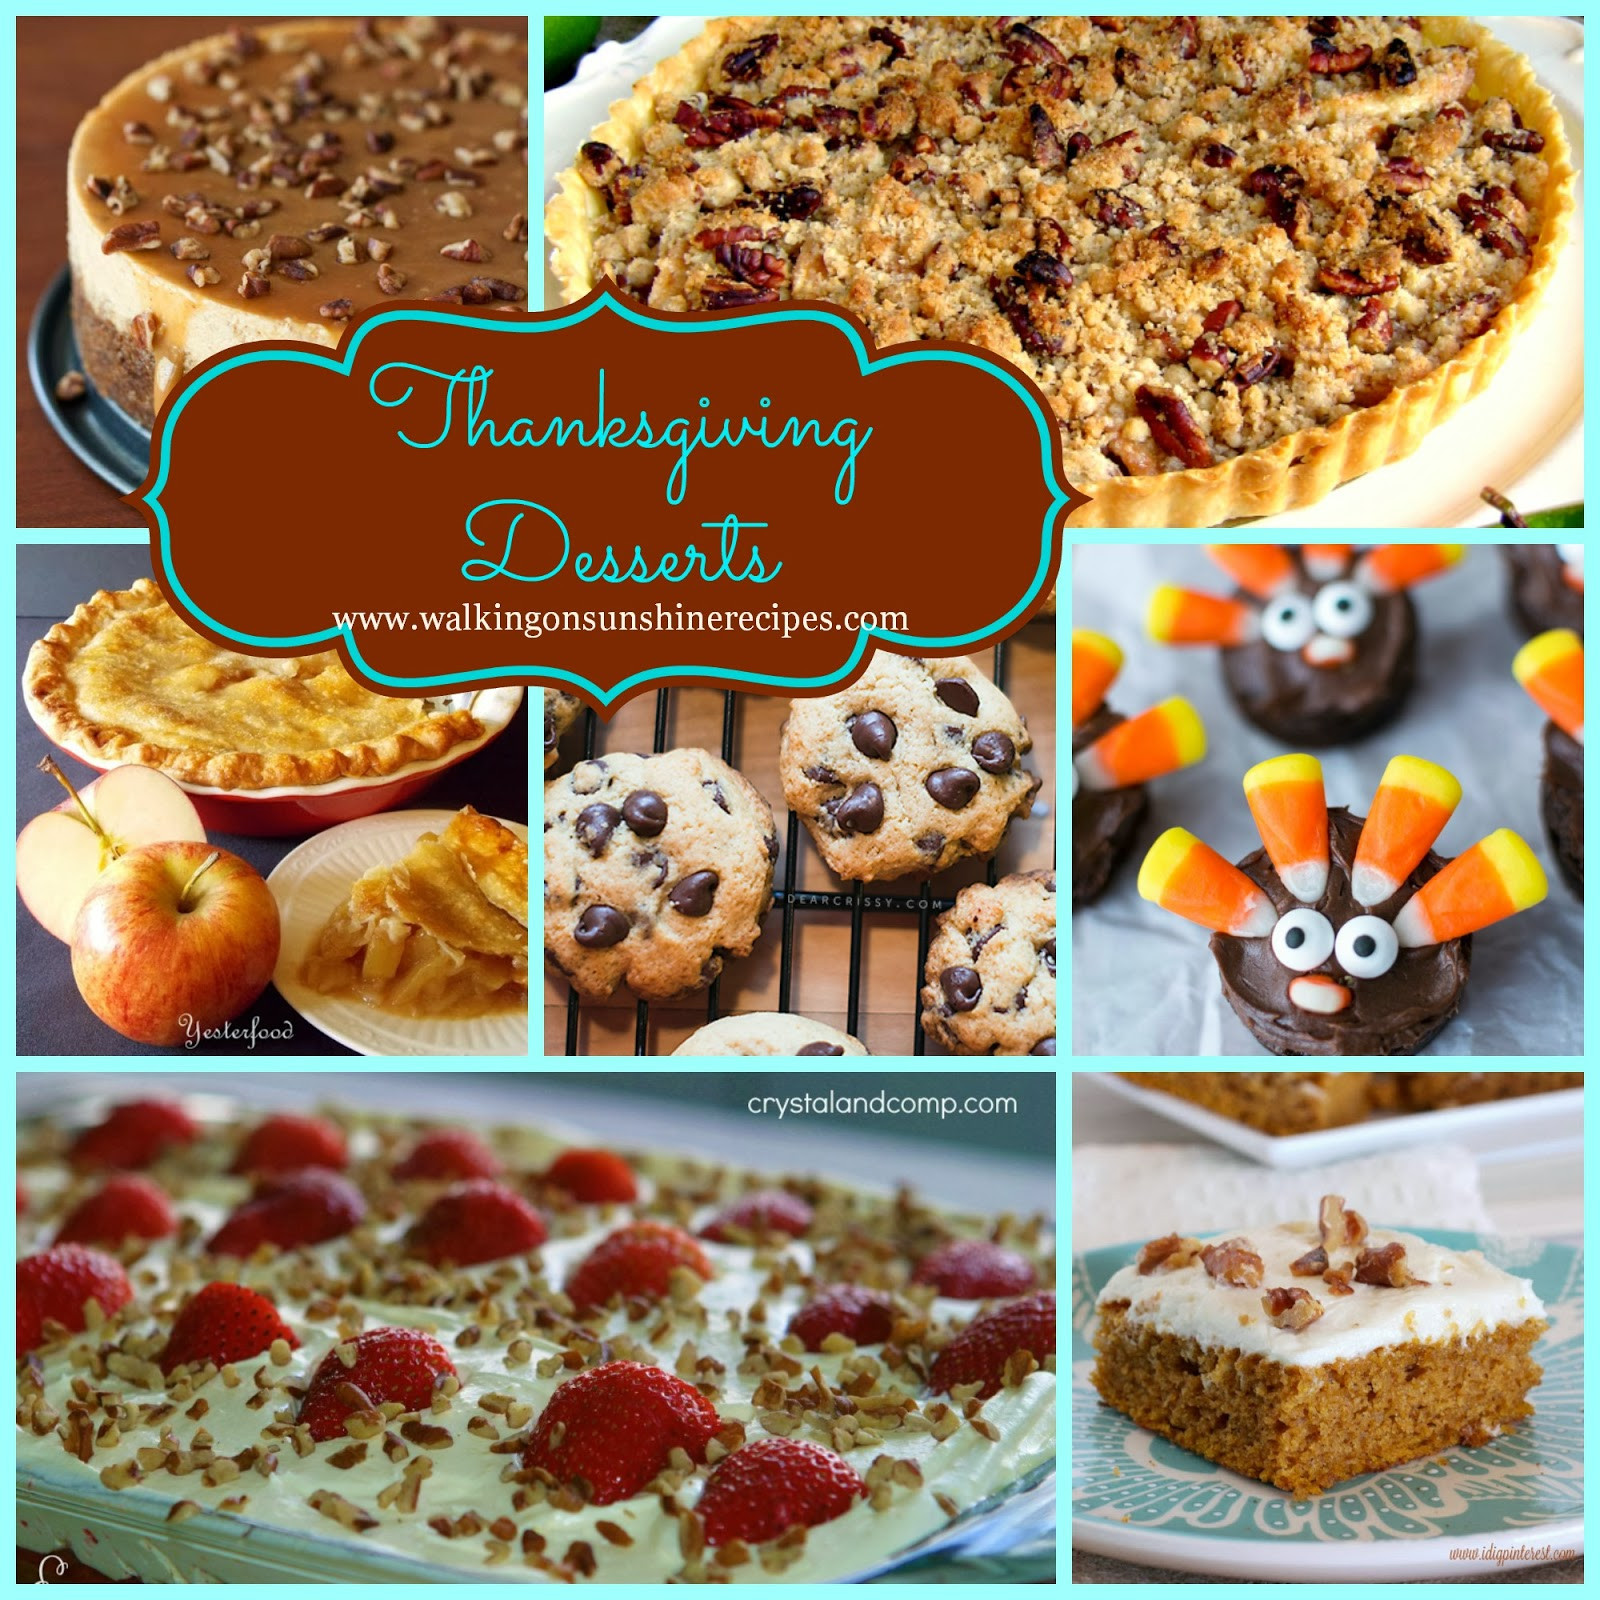 Pinterest Thanksgiving Desserts
 Holidays The Best Desserts to Make for Thanksgiving